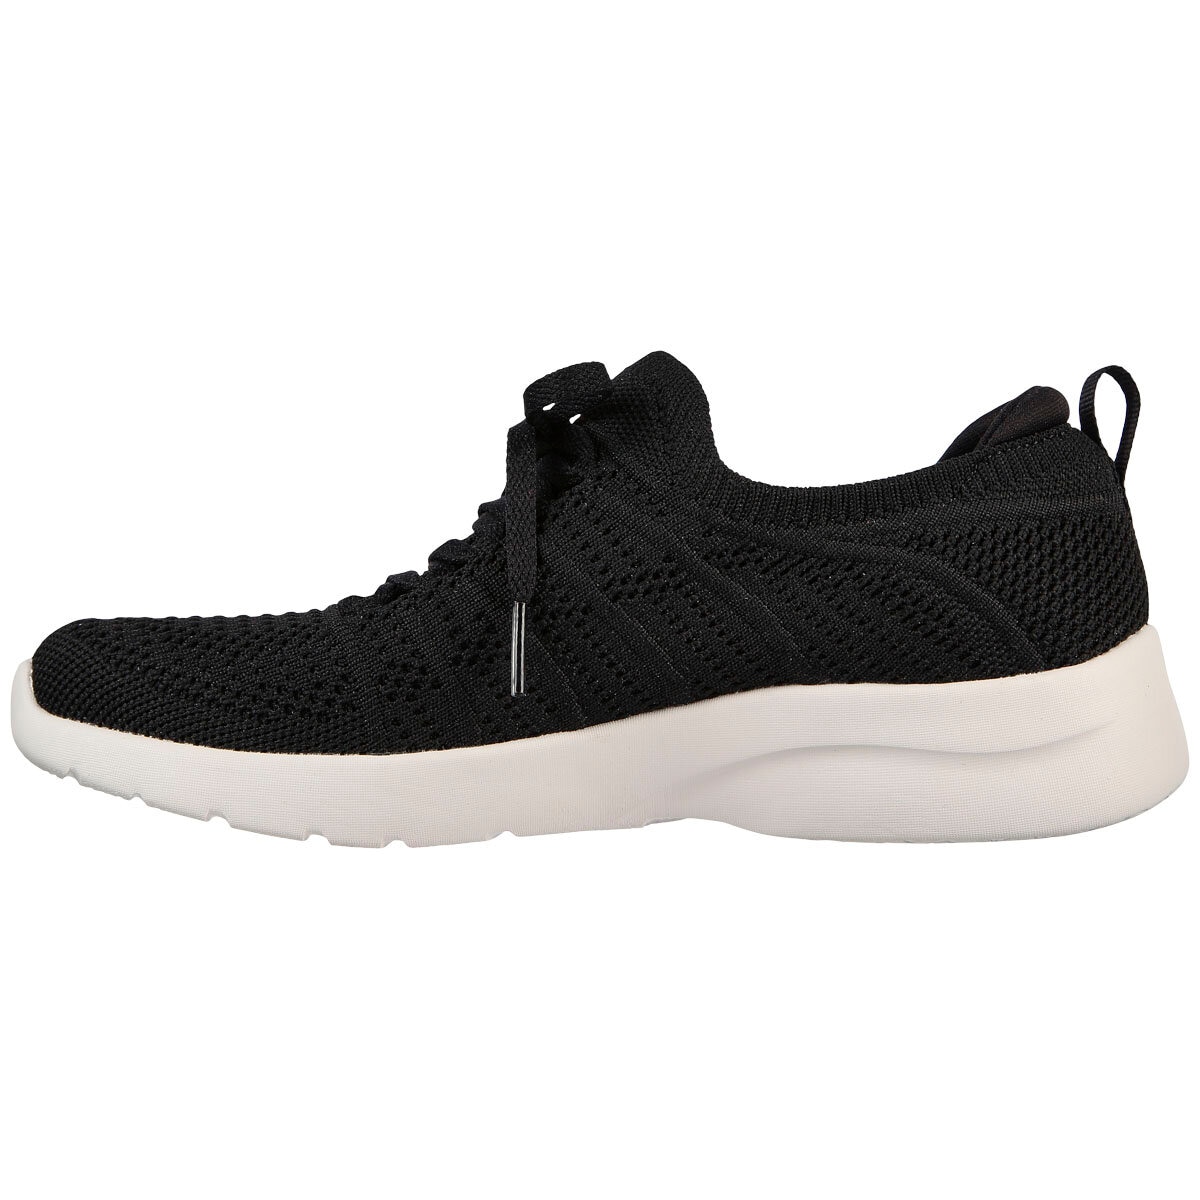 Skechers Dynamight 2 Women's Shoes Black/White | Costco A...